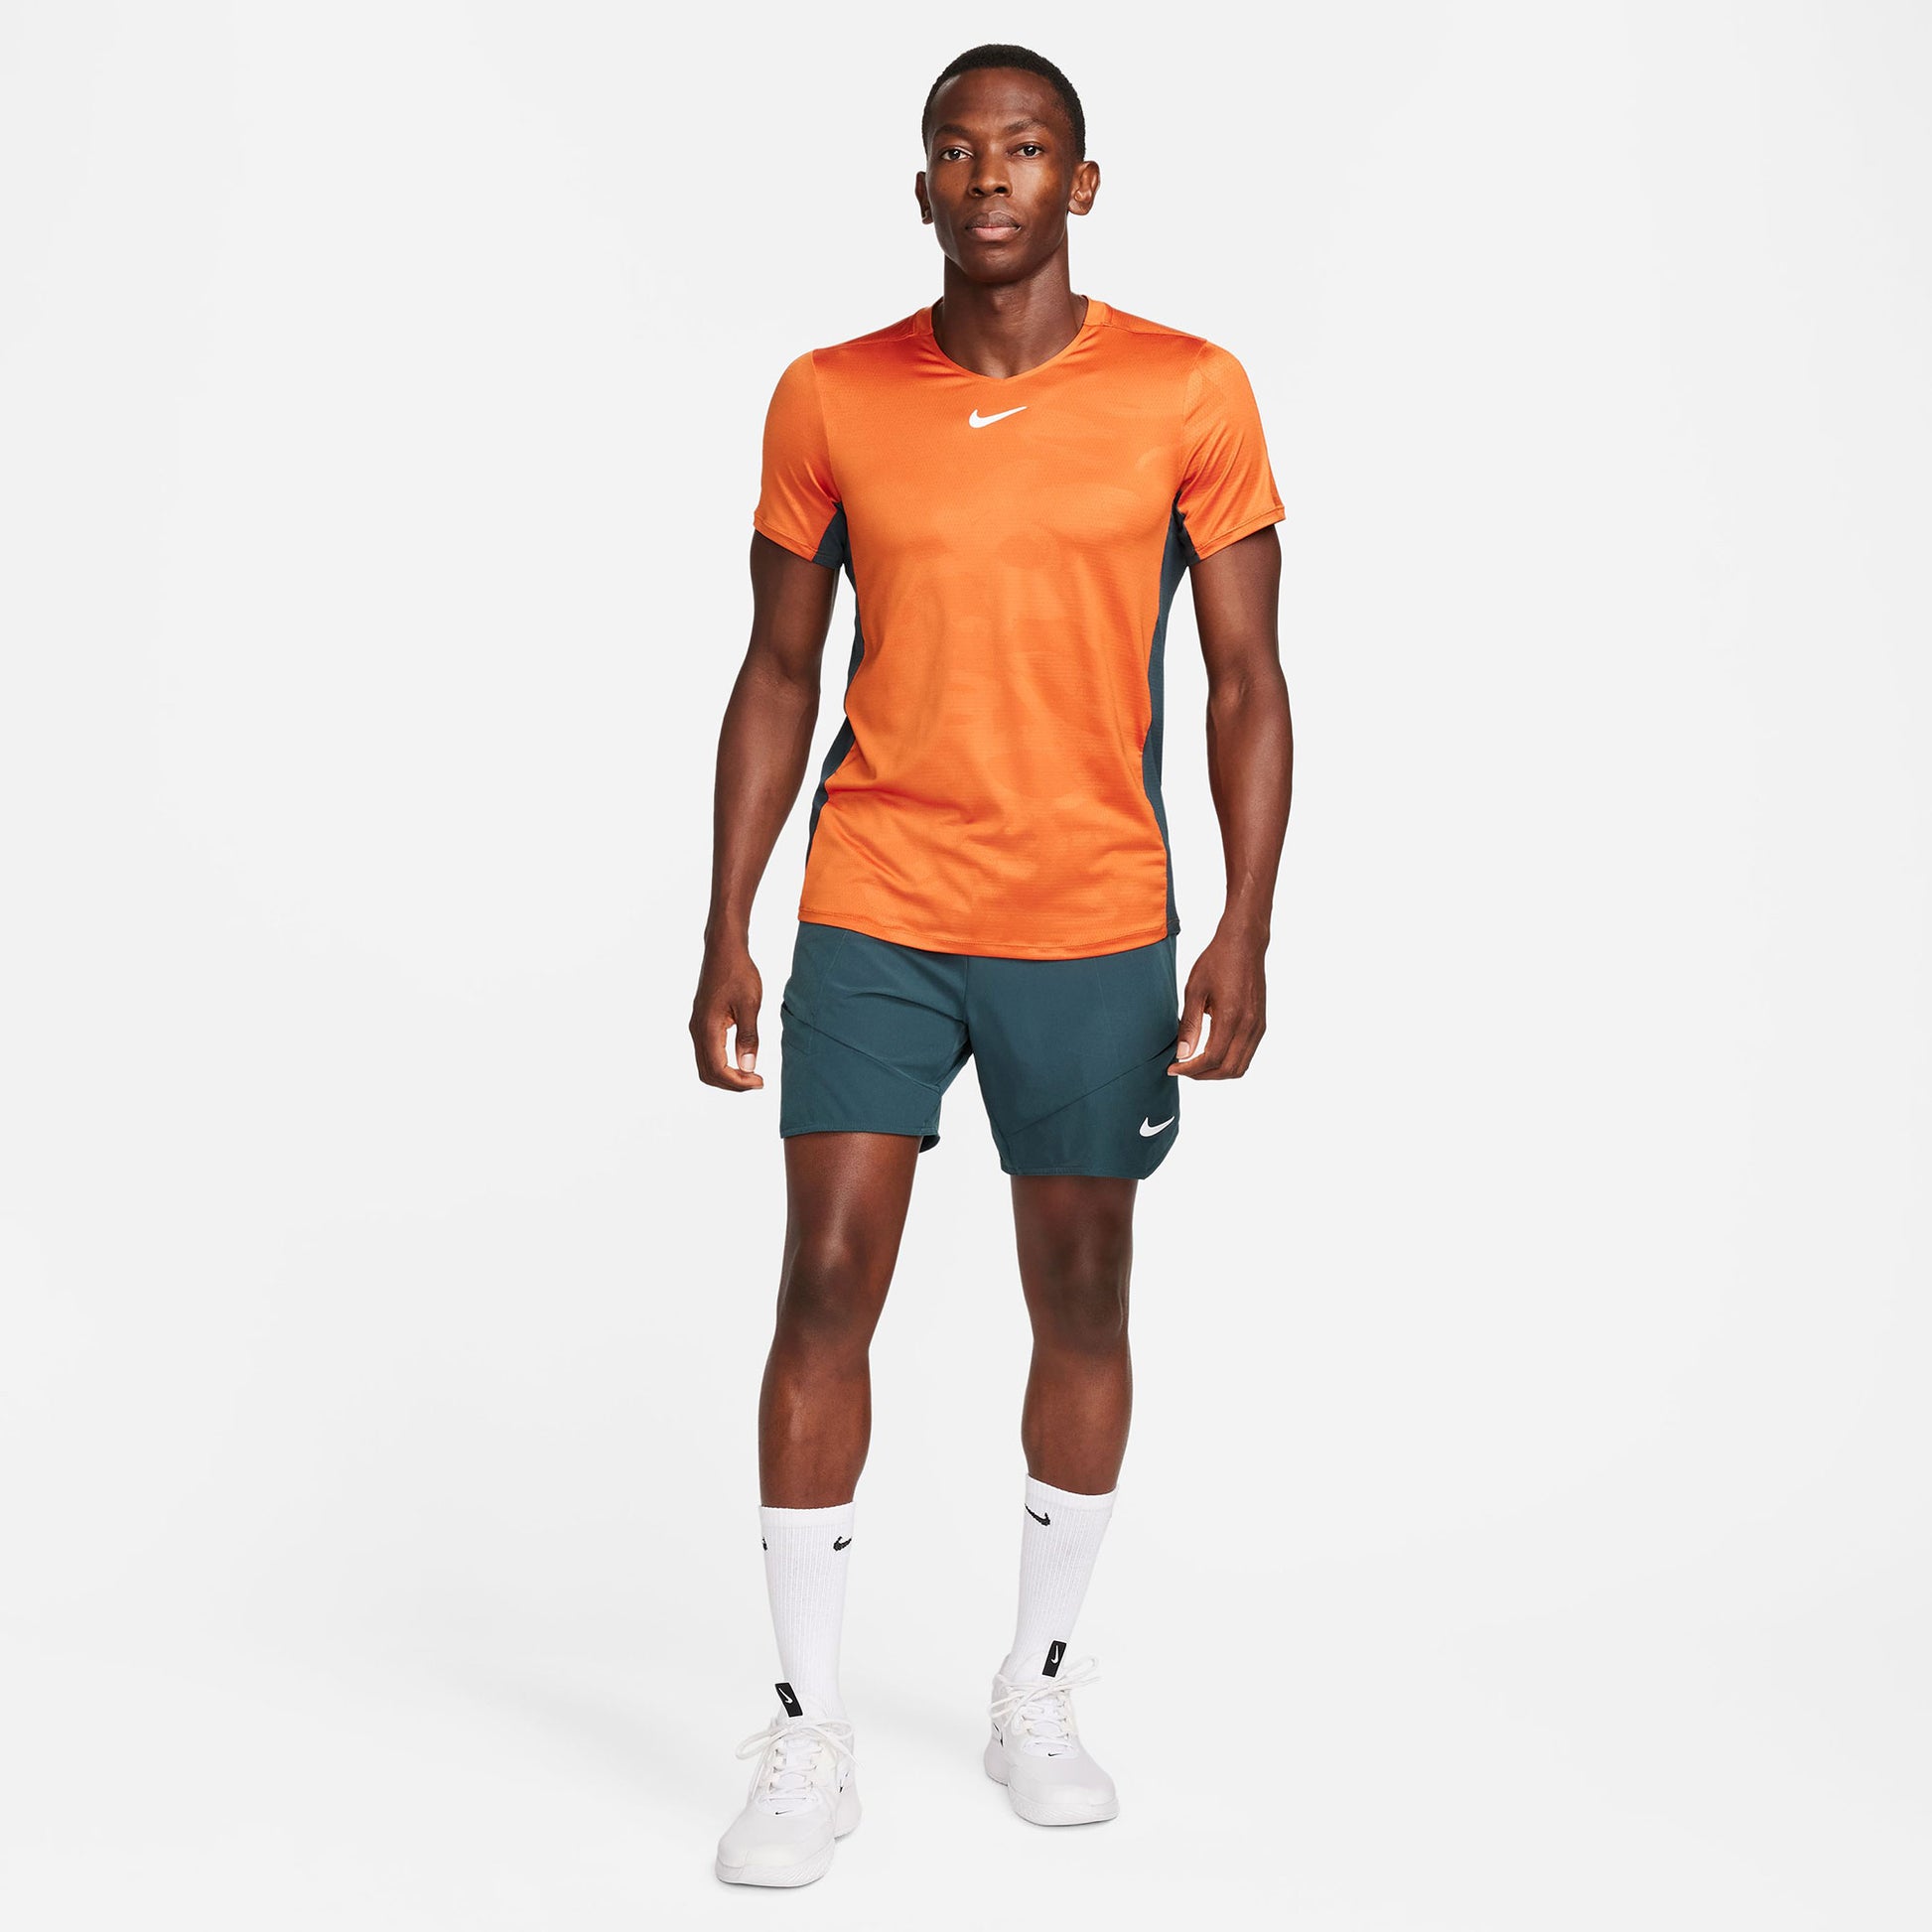 NikeCourt Dri-FIT Advantage Men's Printed Tennis Shirt Orange (5)